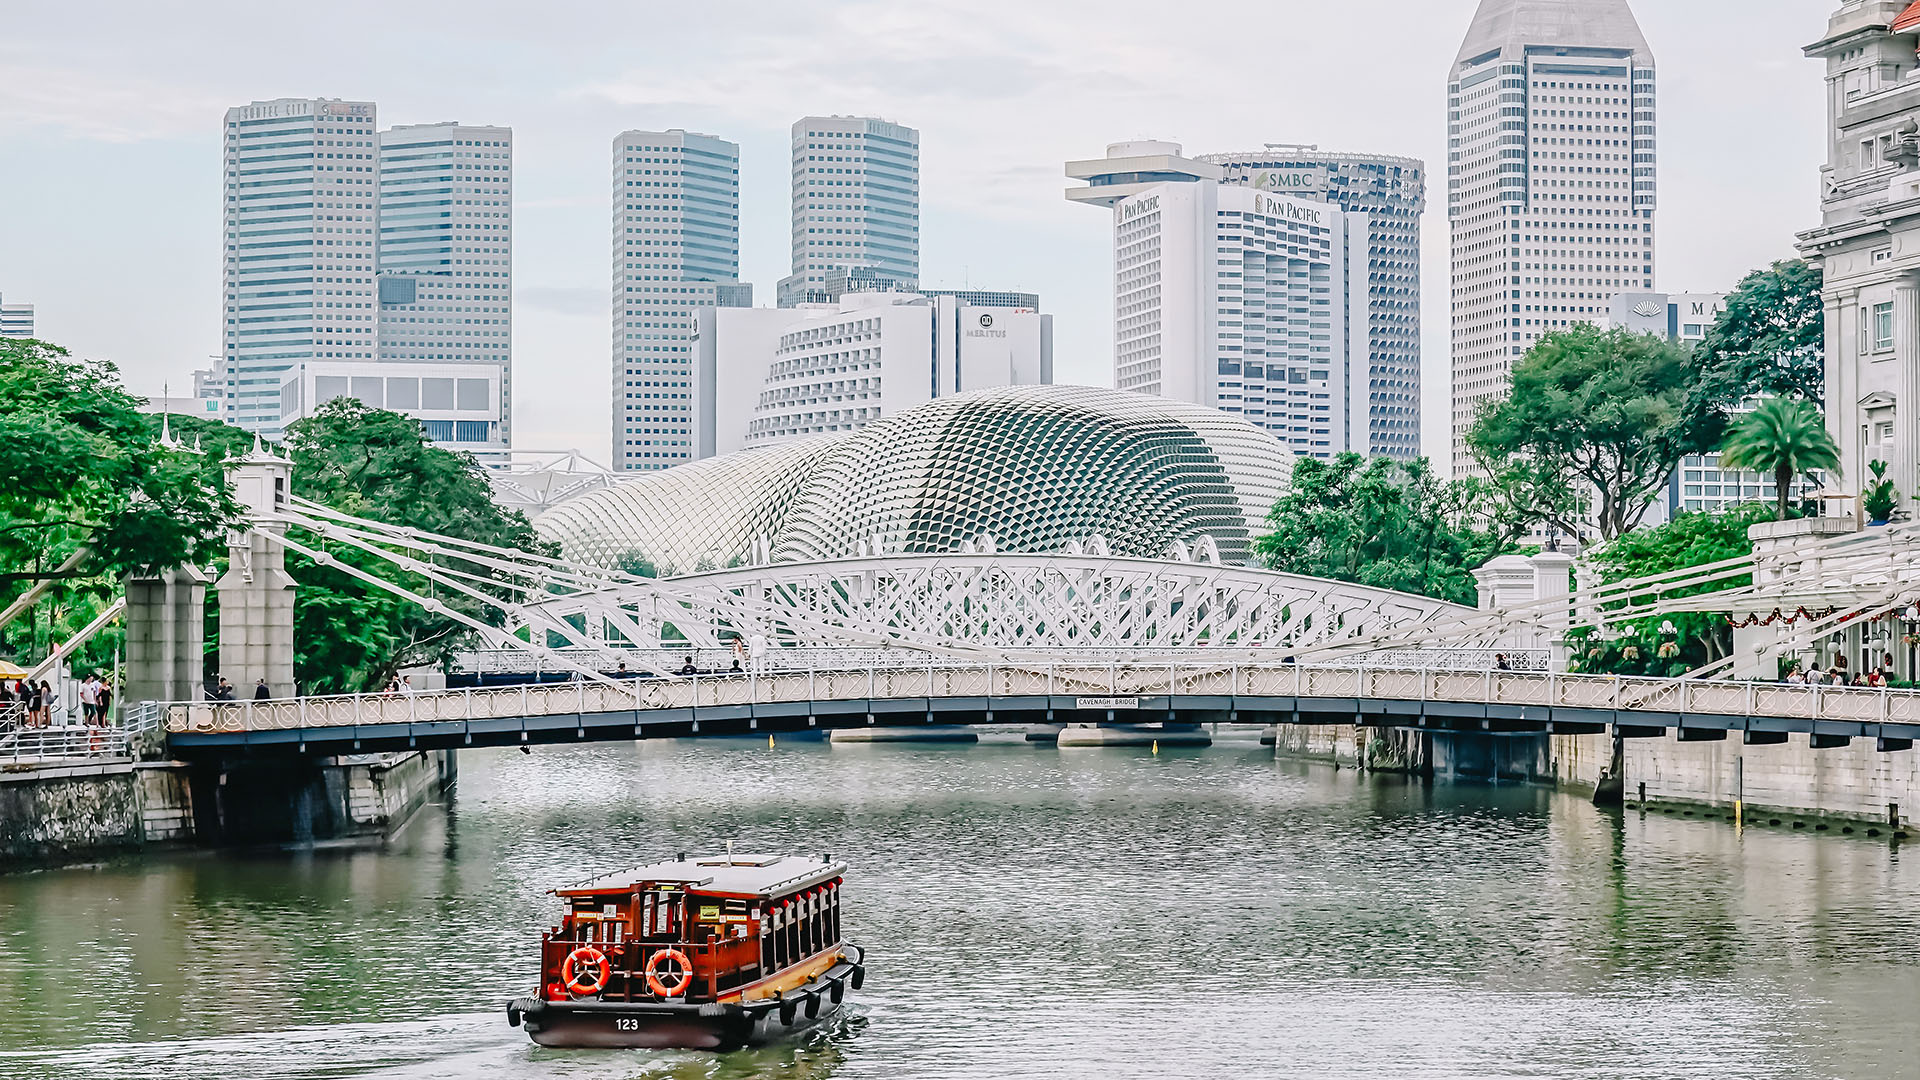 Singapore FinTech Festival: November 11-13, 2019